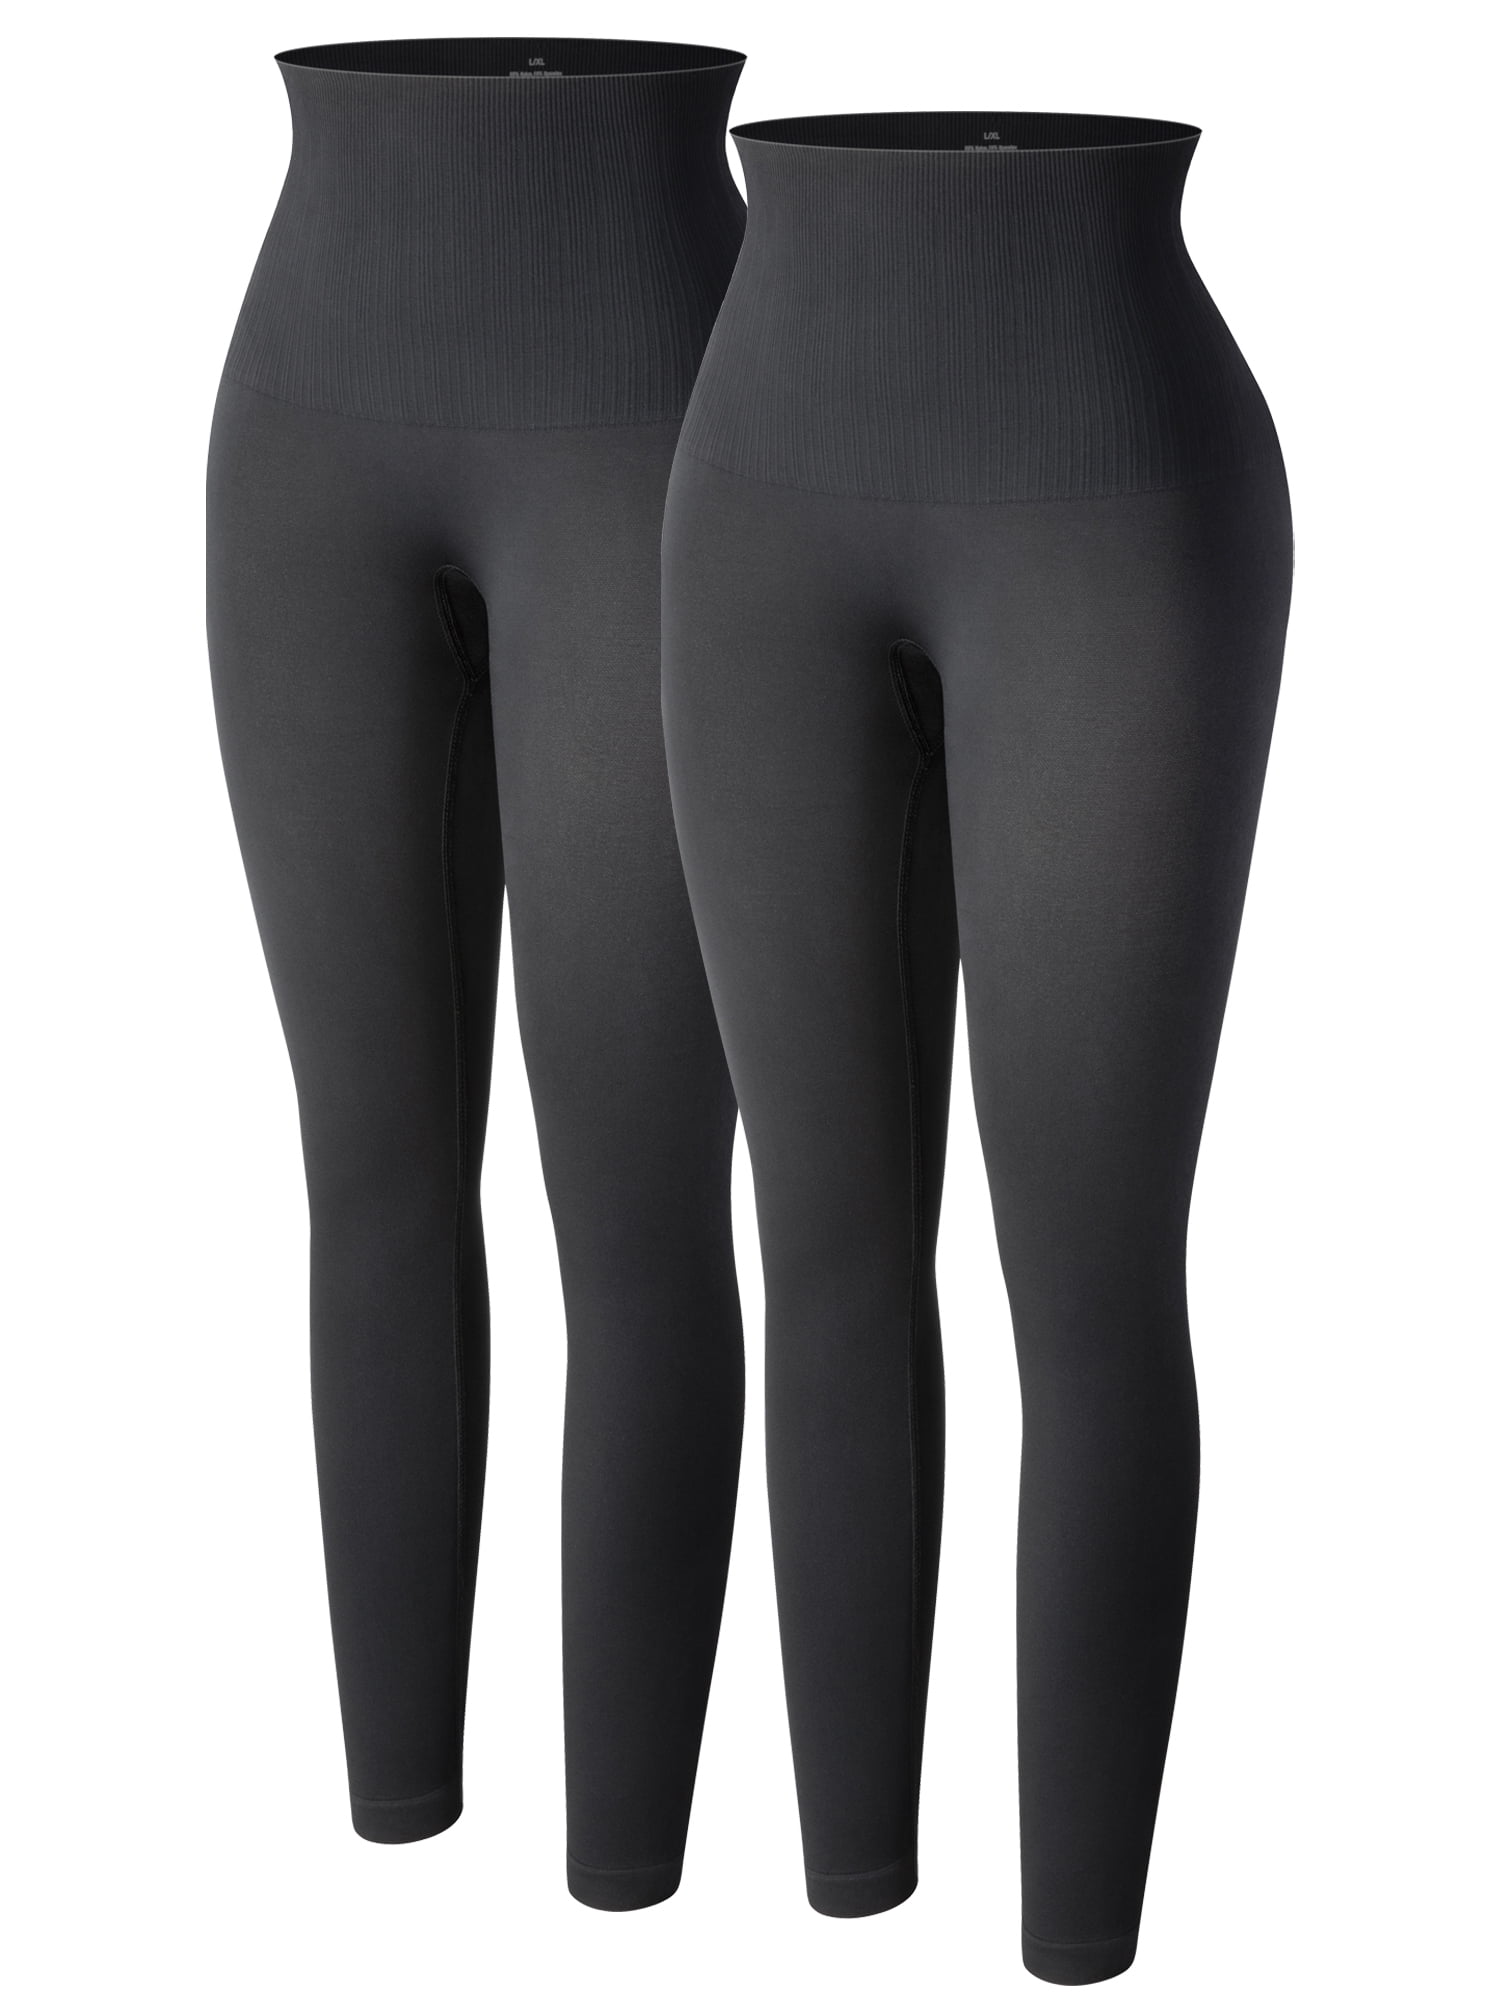 MELDVDIB High Waist Tummy Control Leggings for Women Waist Trainer Corset  Compression Seamless Buckle Yoga Pants on Clearance 